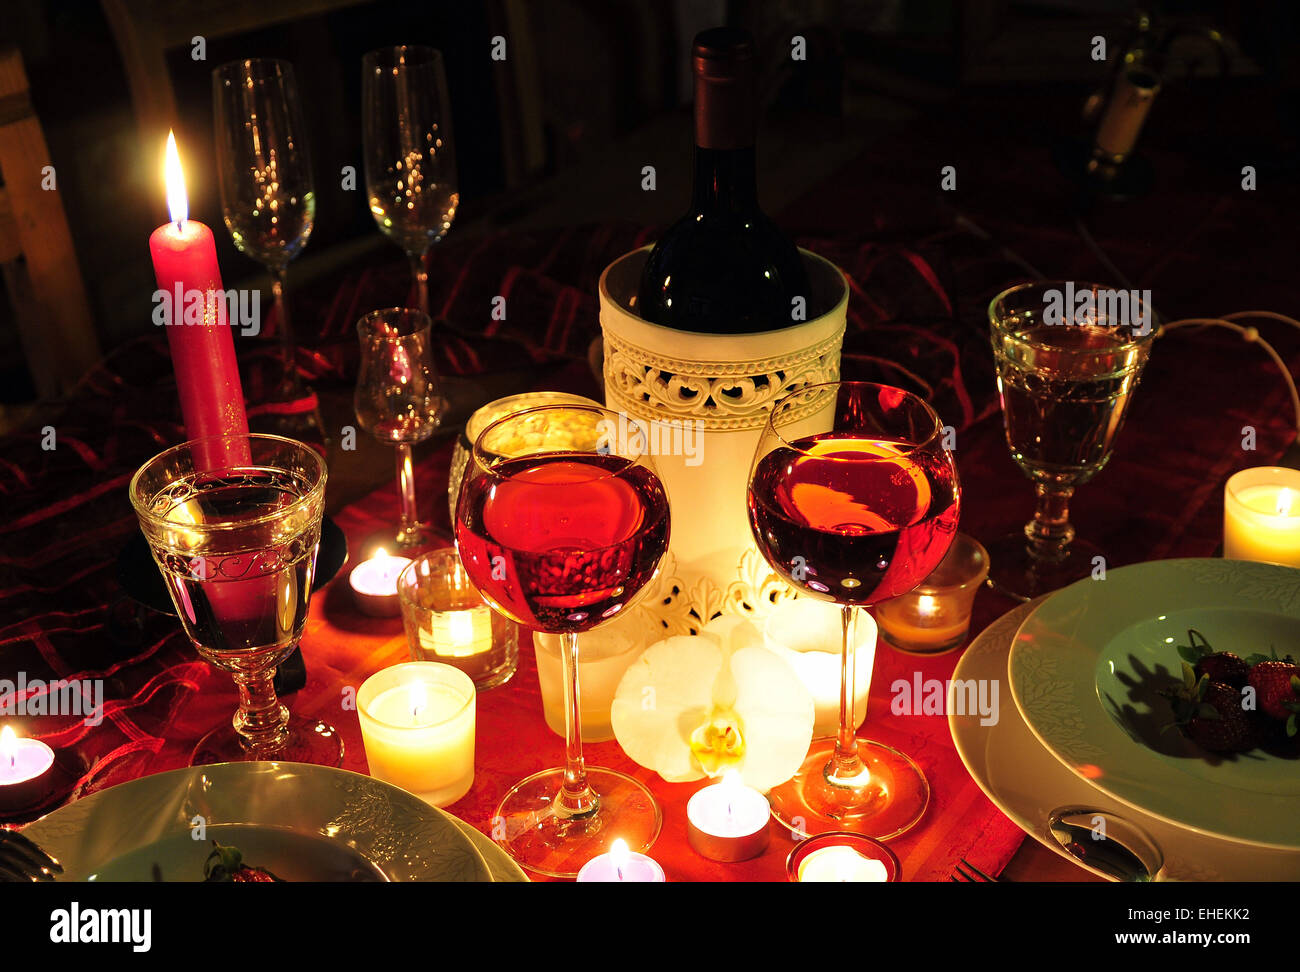 Cena romántica con velas Fotografía de stock - Alamy